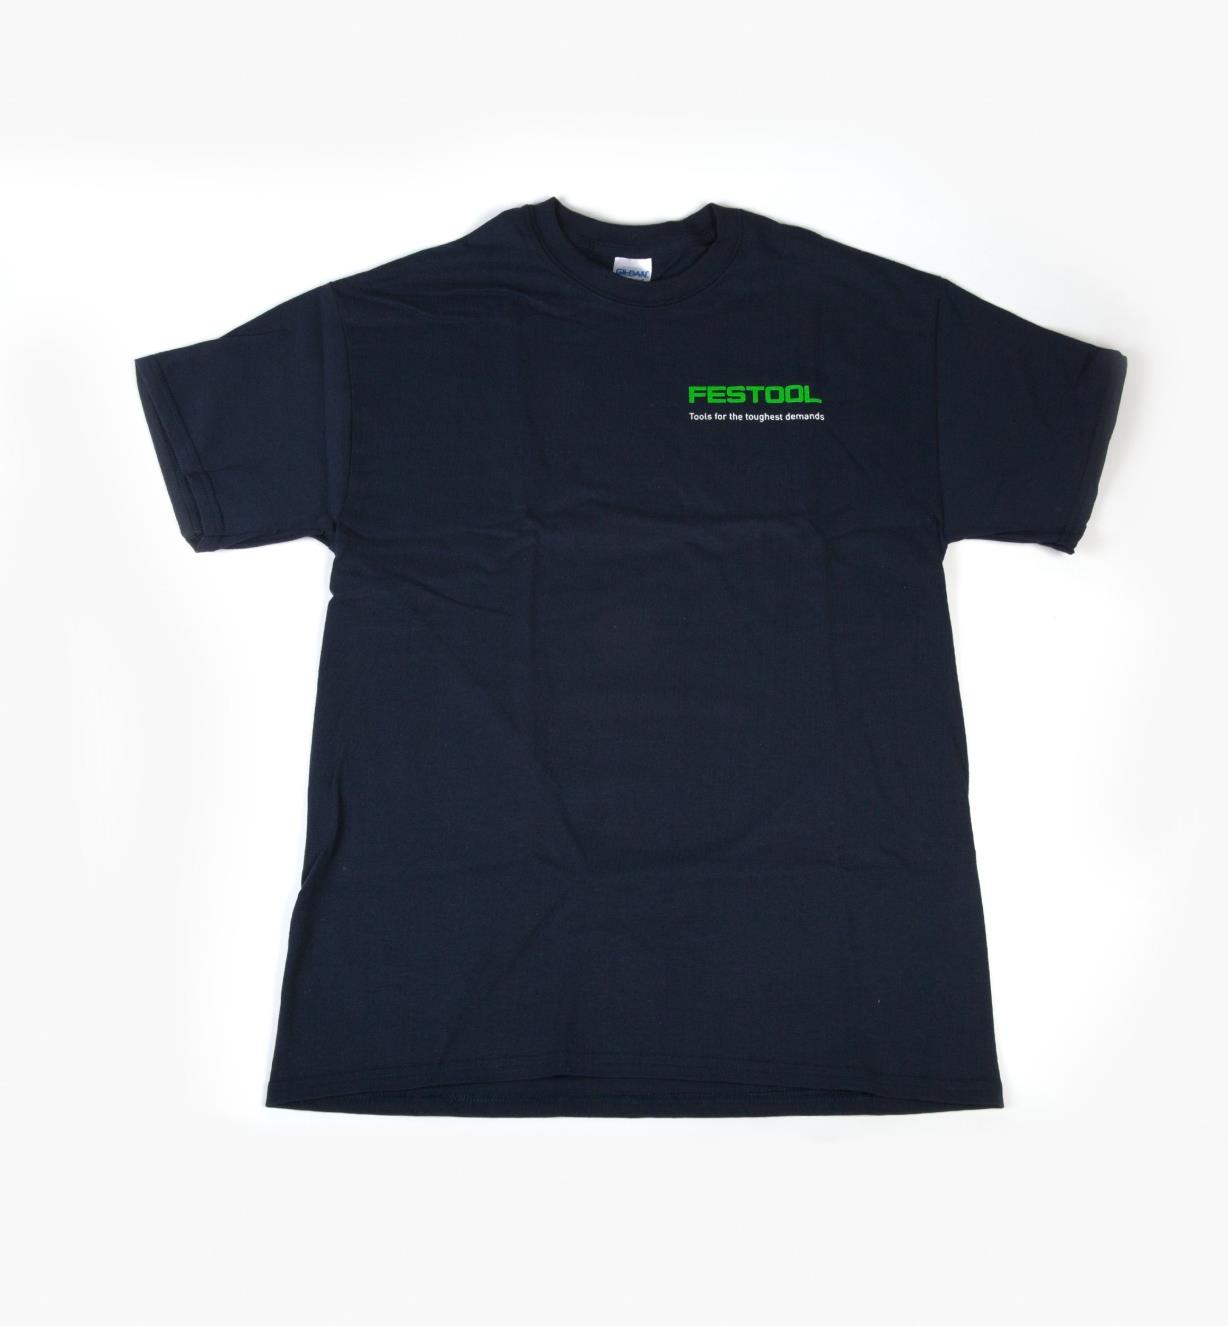 ZAM0634 - T-shirt Festool, M